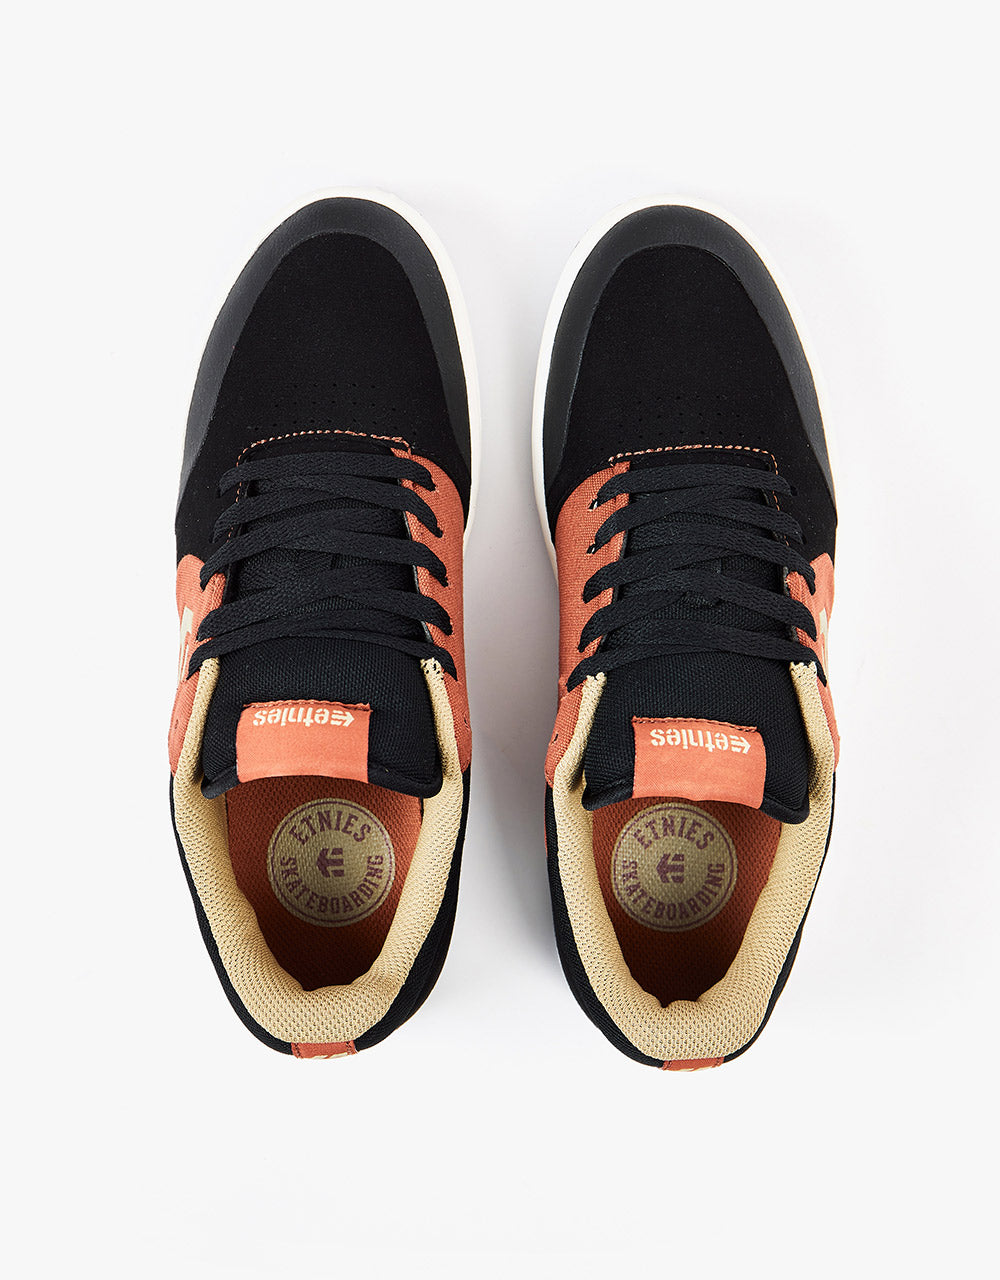 Etnies x Michelin Marana Skate Shoes - Black/Tan/Orange